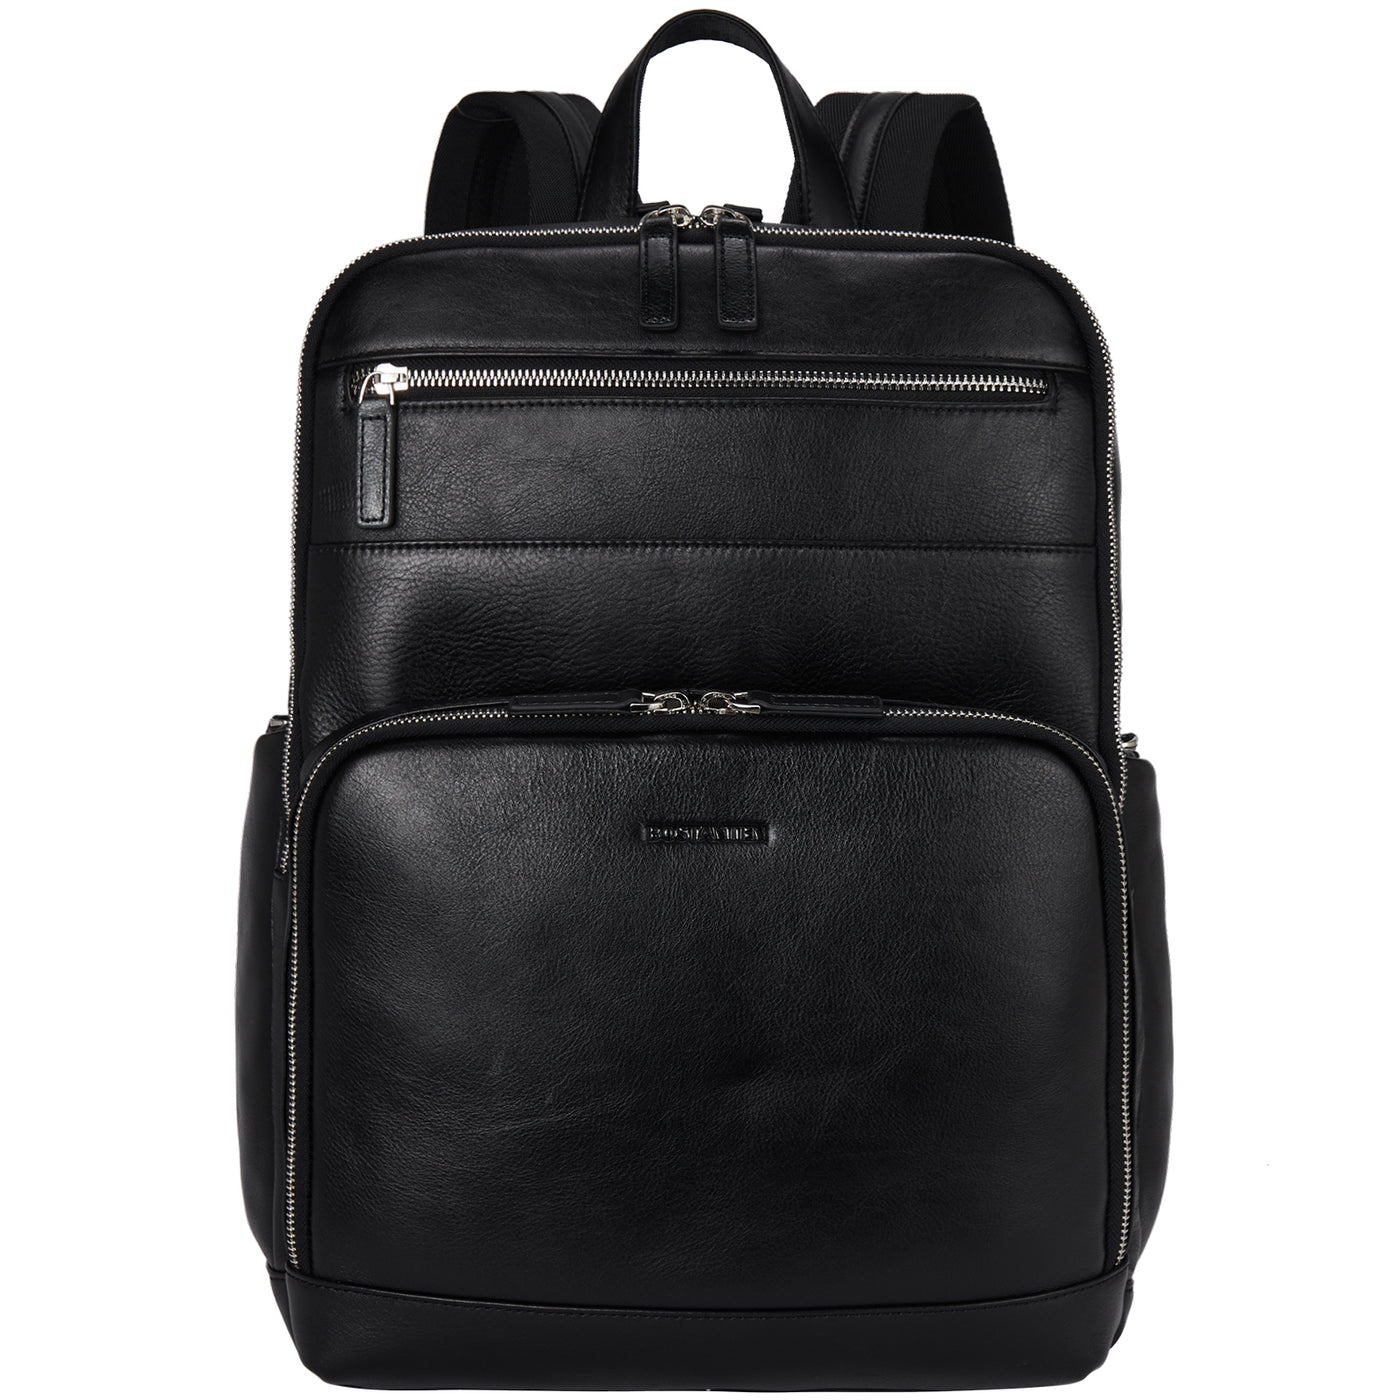 Men's Leather Backpack Shoulder Bag Weekender Travel School Laptop Bags  Daypack